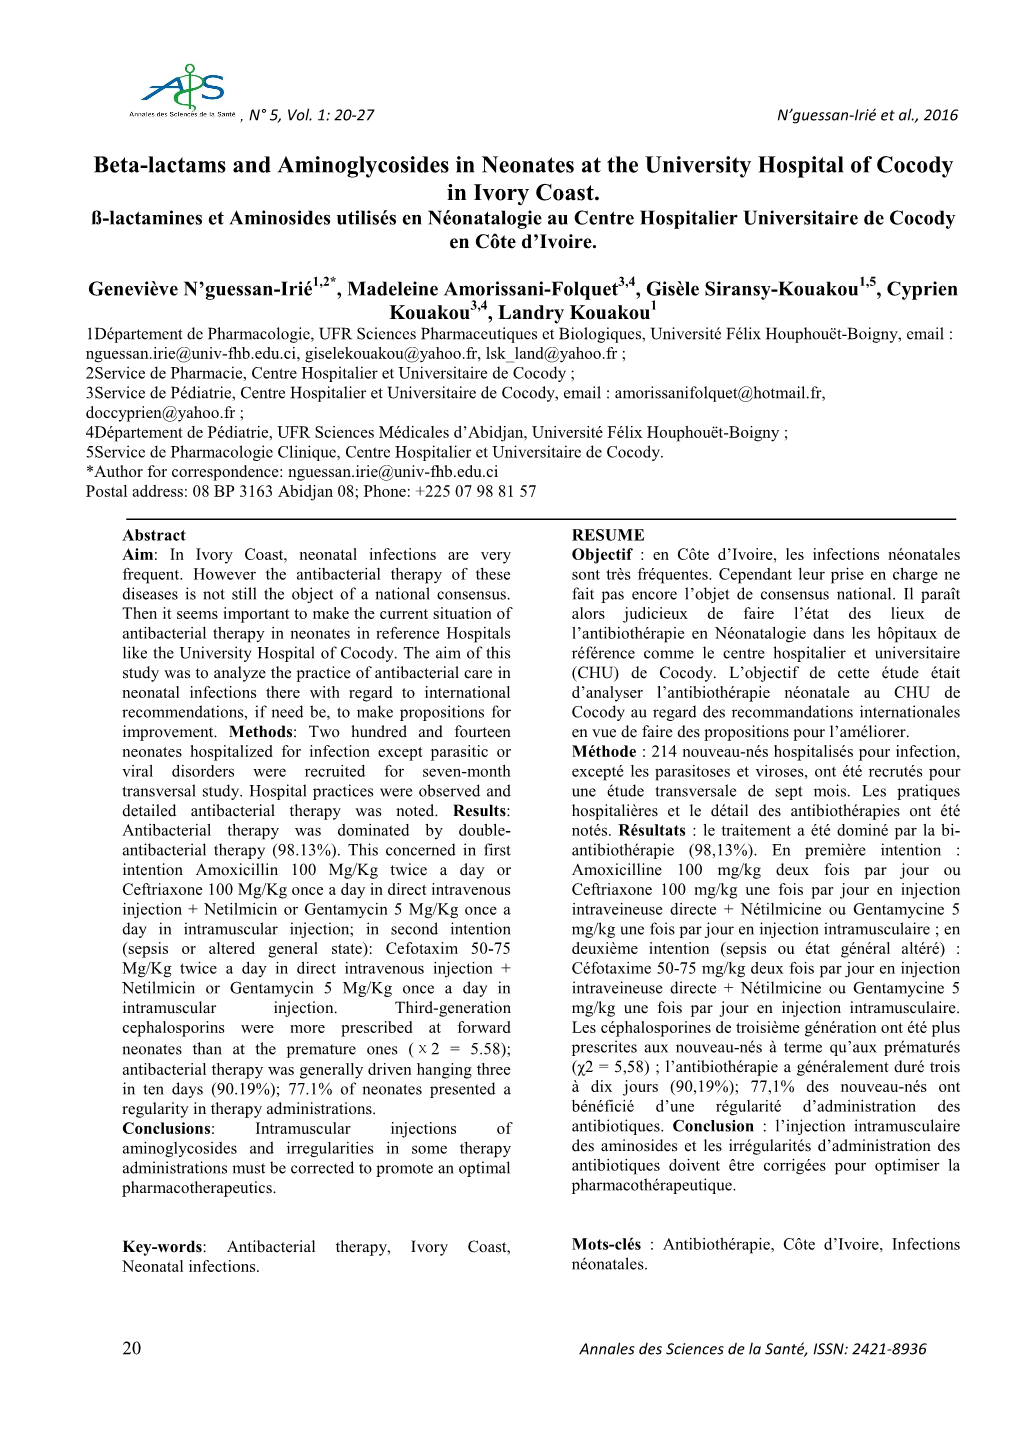 Beta-Lactams and Aminoglycosides in Neonates at the University Hospital of Cocody in Ivory Coast